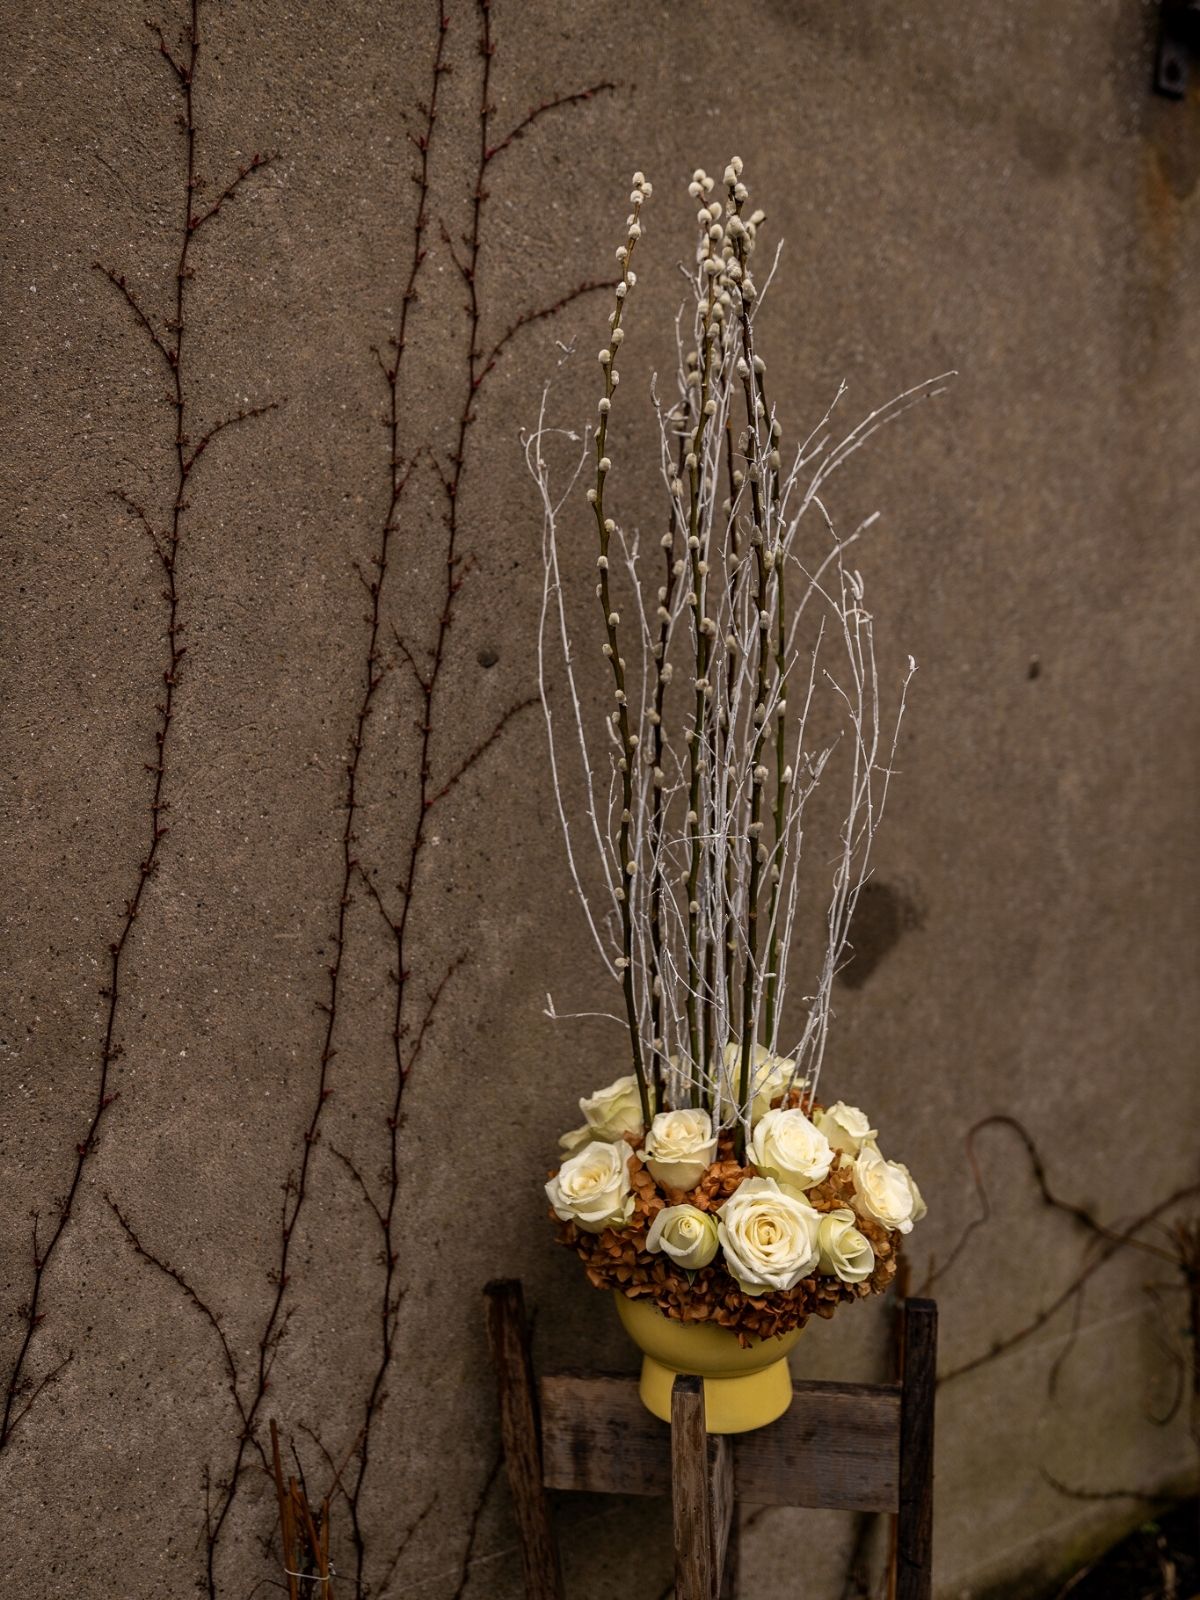 Snowstorm+ Roses With Dried Hydrangea - A Blog by Anna Lamot-Bach on Thursd